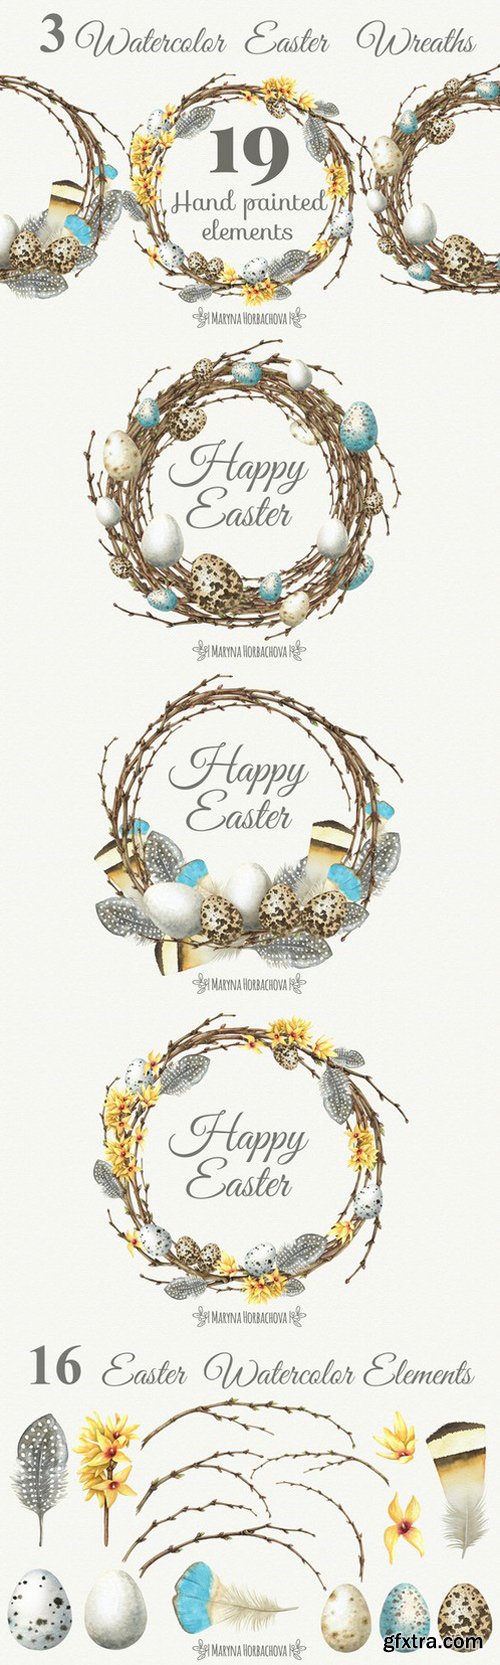 CM - Watercolor Easter Wreaths 567985